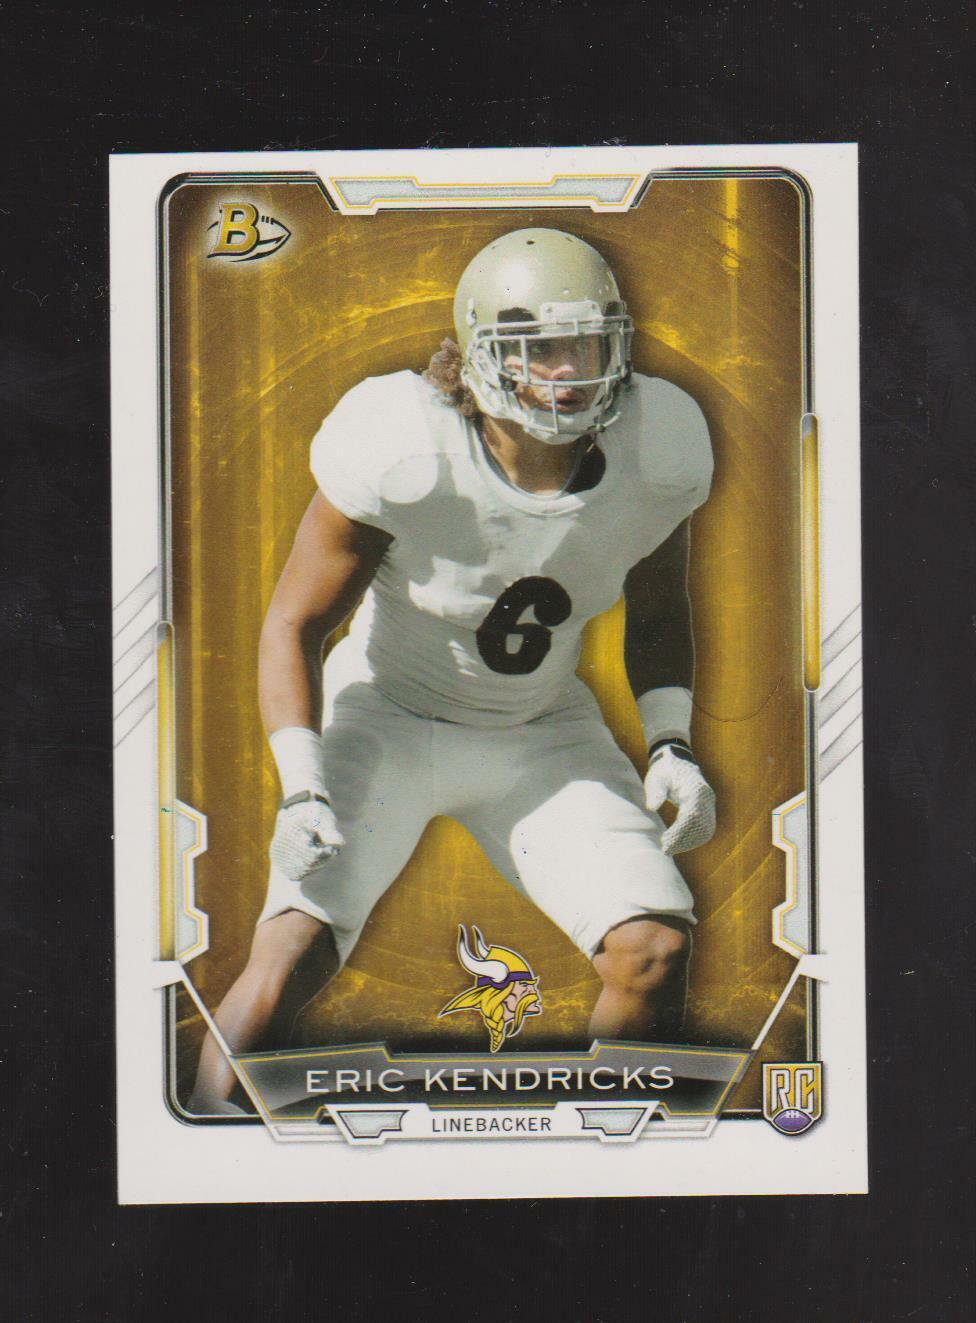 2015 Bowman #16 Eric Kendricks rookie card, Minnesota Vikings. rookie card picture